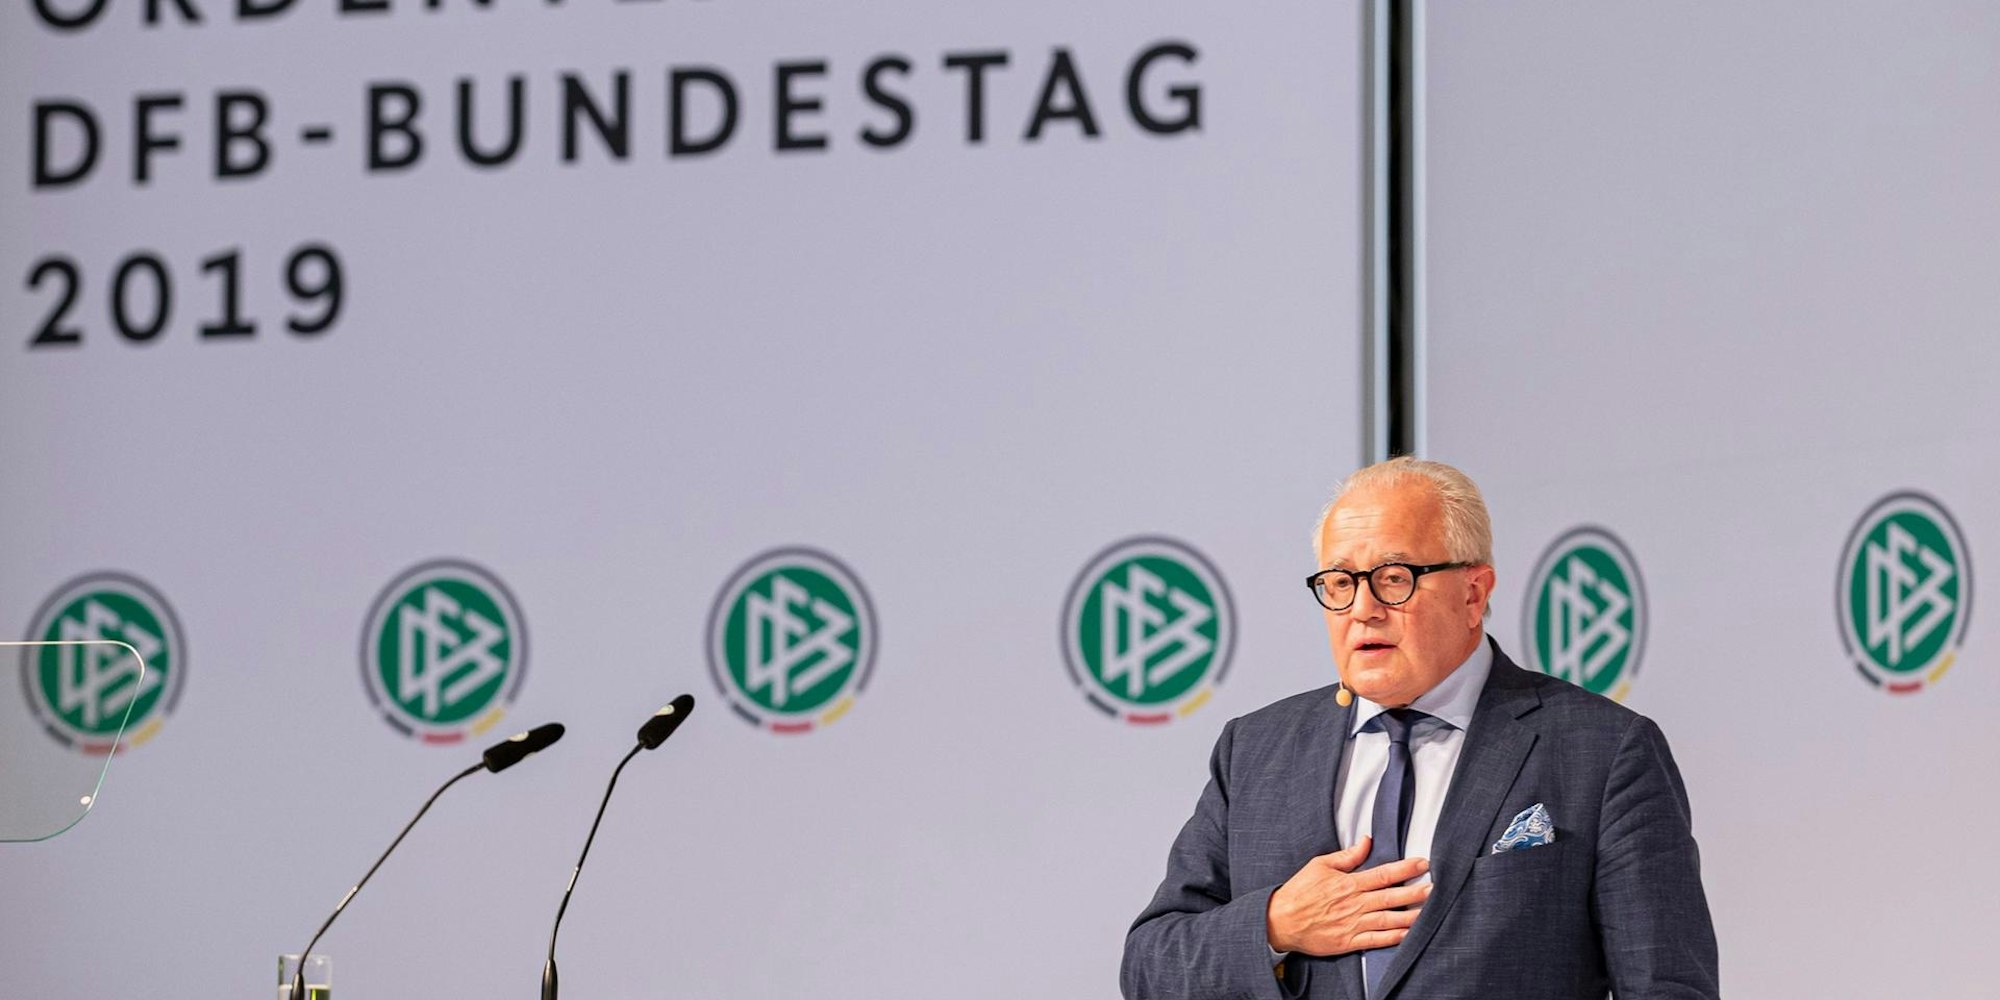 Bundestag 2019